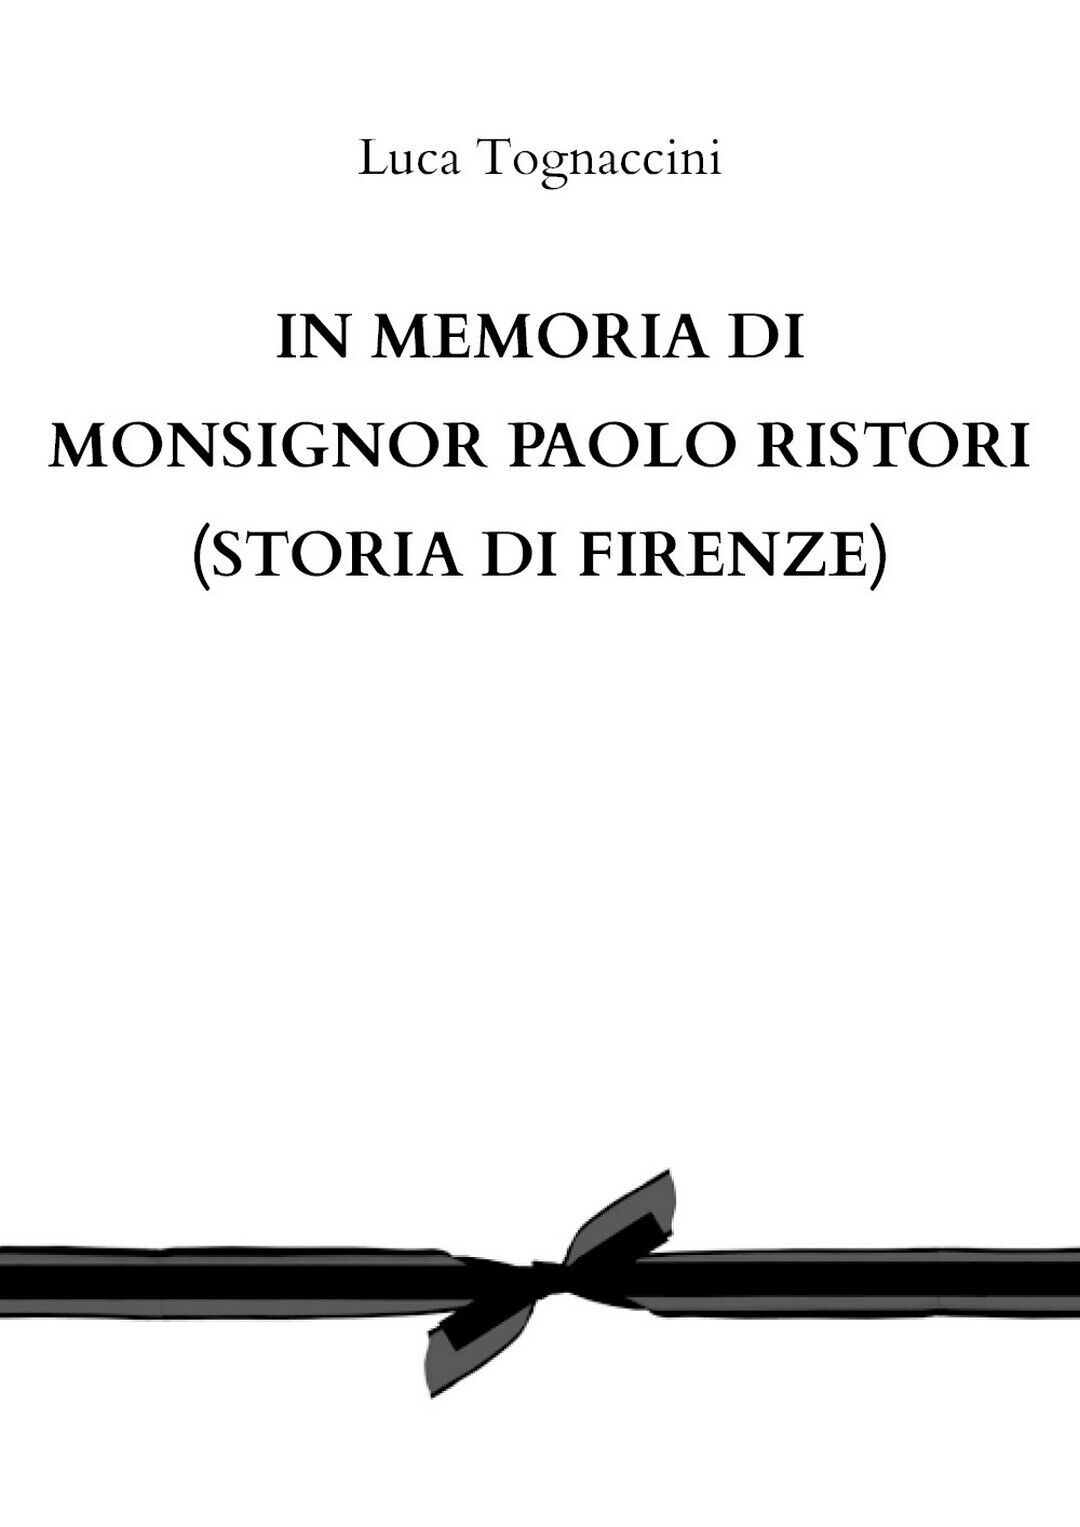 In memoria di Monsignor Paolo Ristori (STORIA DI FIRENZE)  di Luca Tognaccini 